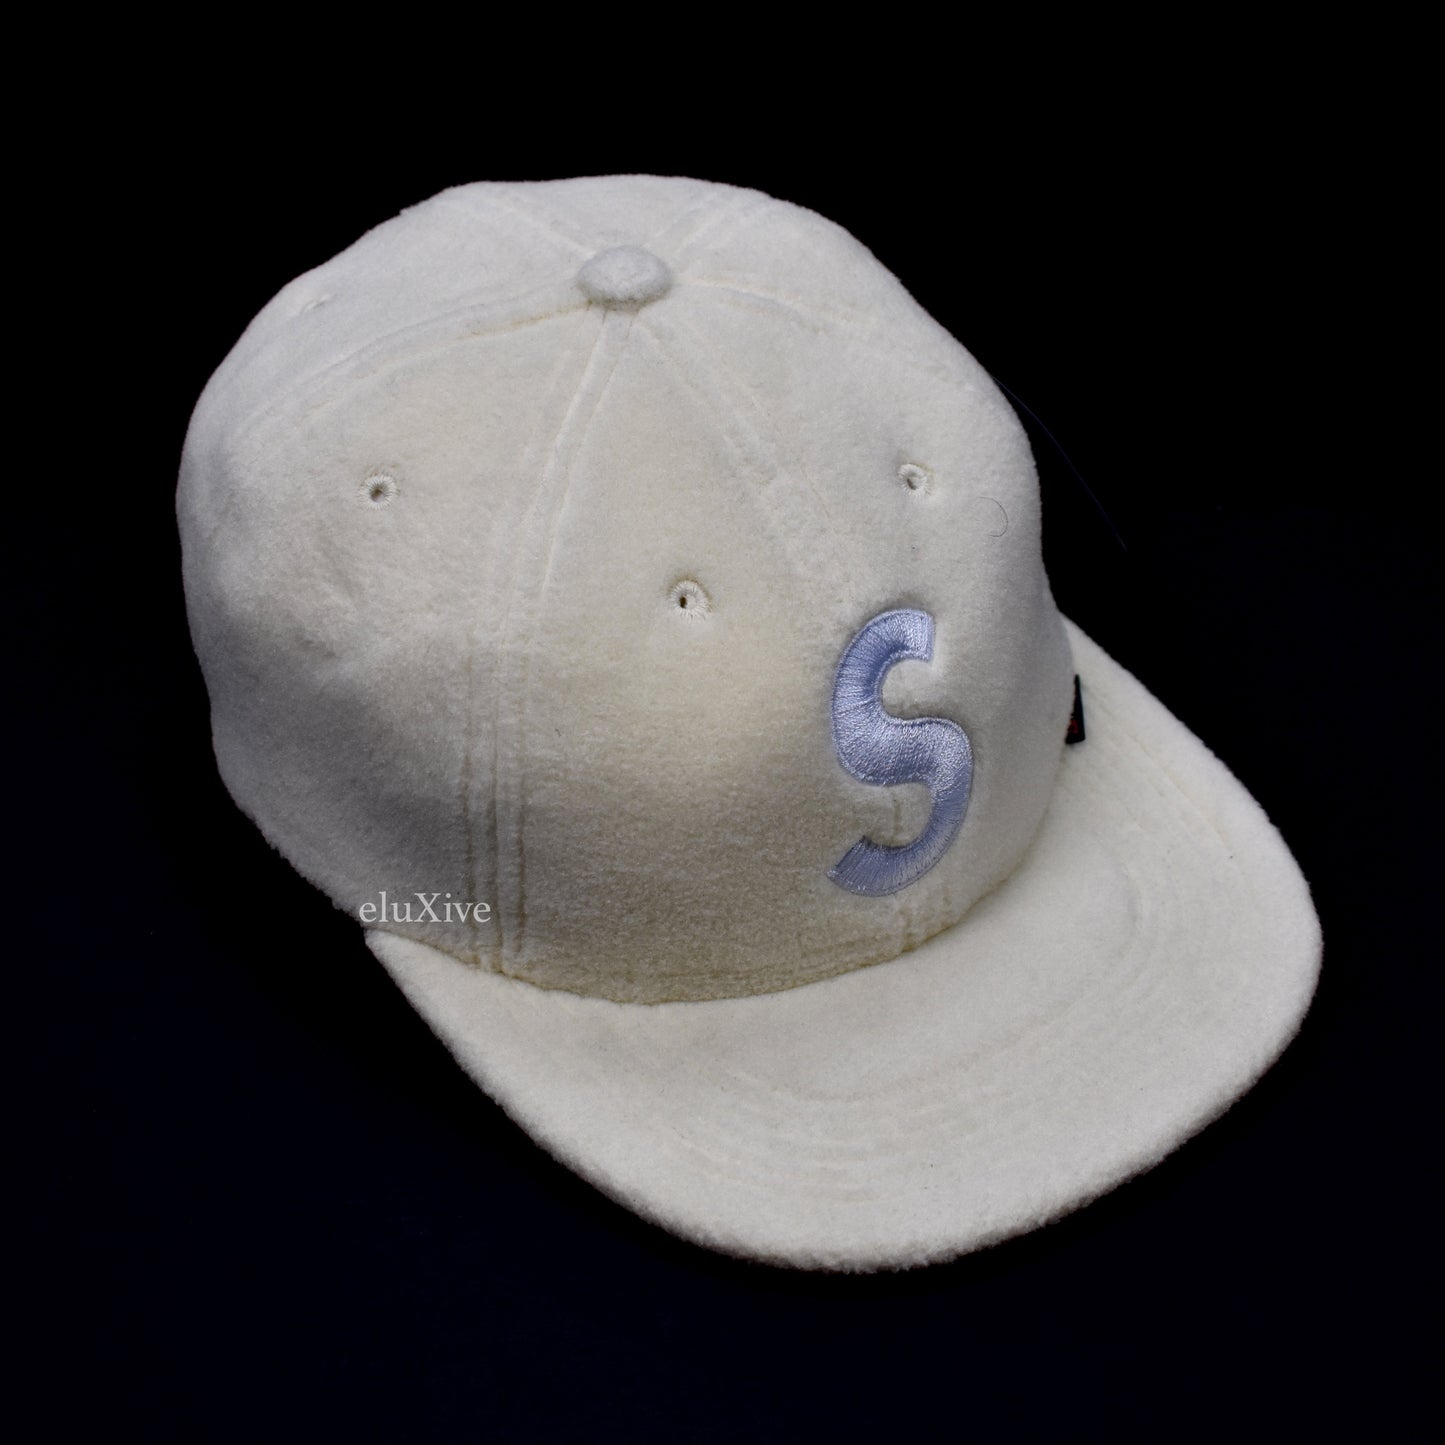 Supreme - Natural Polartec S-Logo Hat